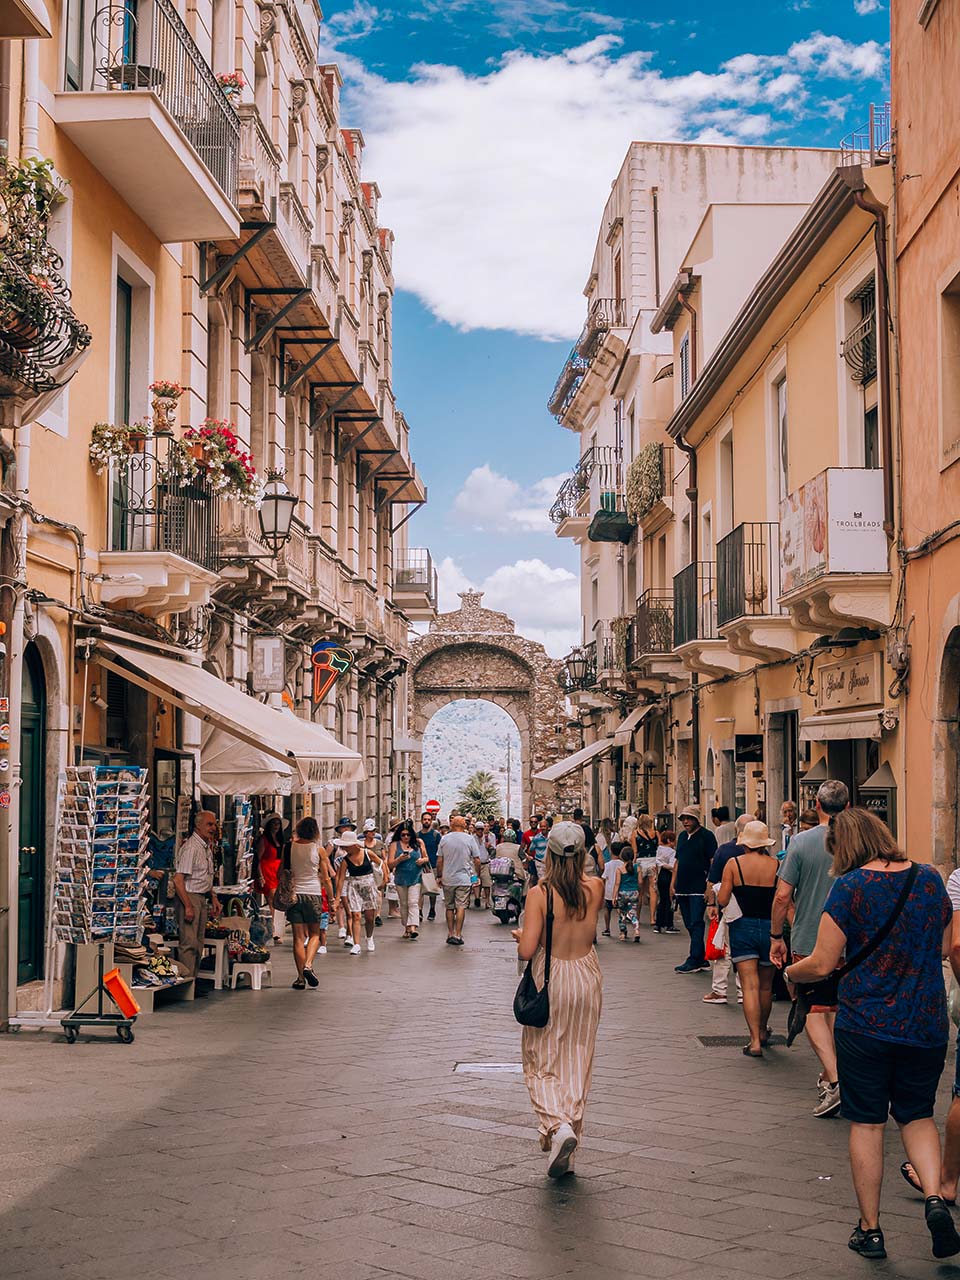 People walking in the main street of Taormina